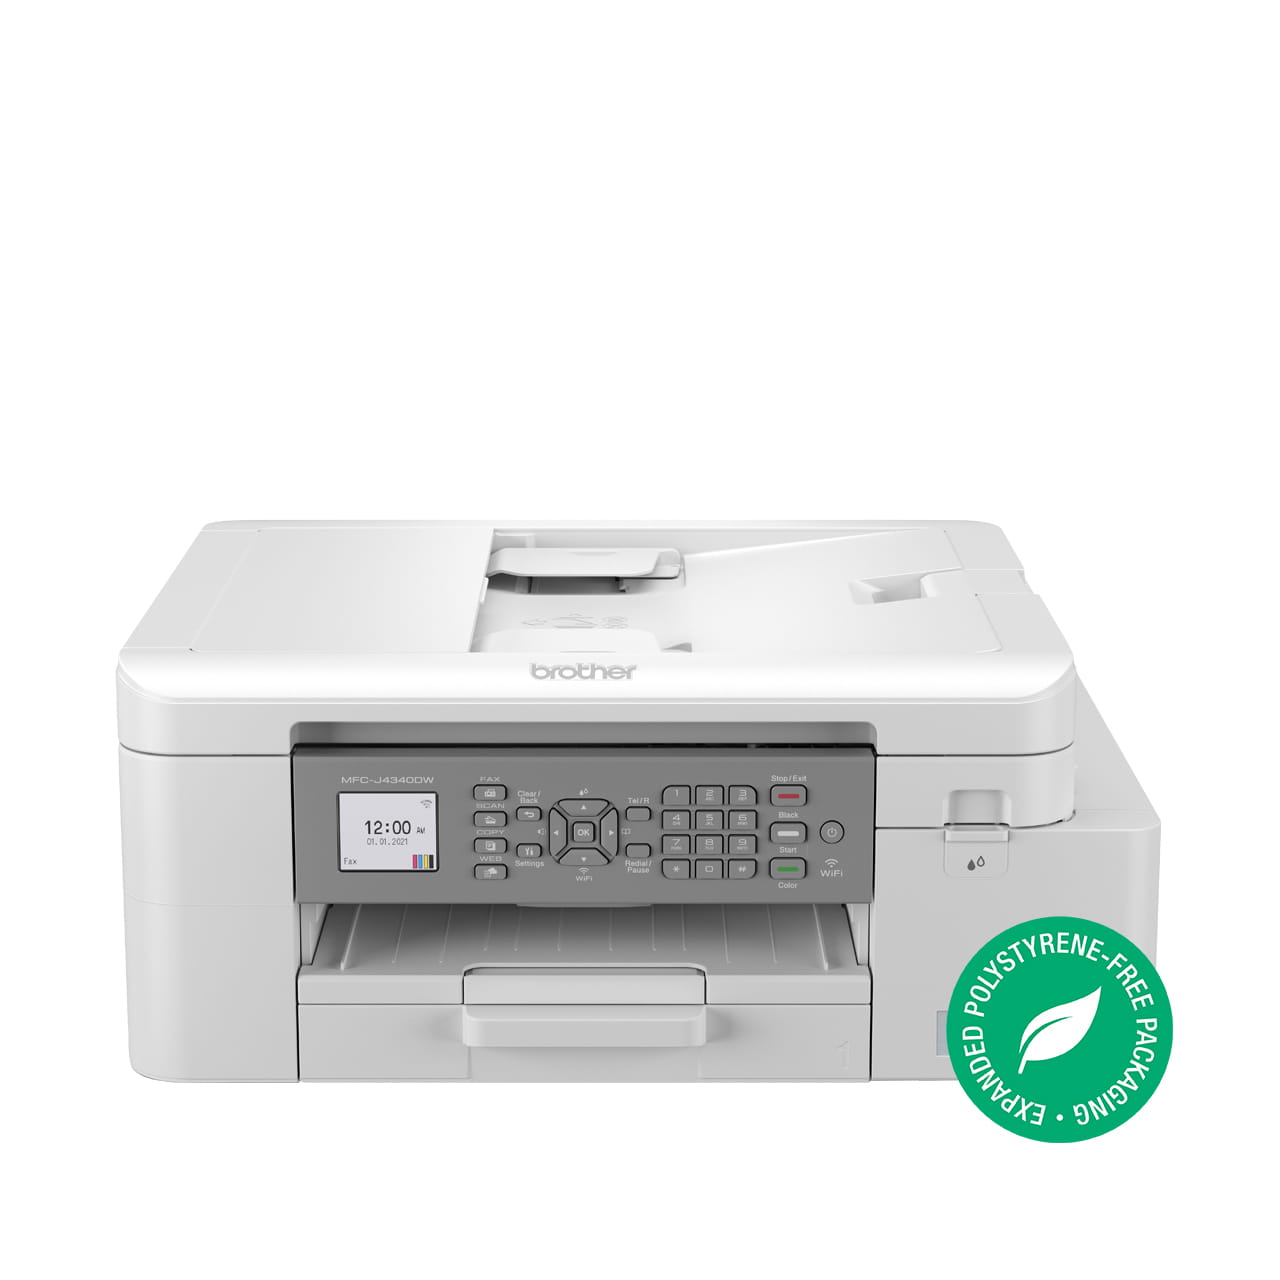 MFC-J4340DW XL Multi-Function Printer 